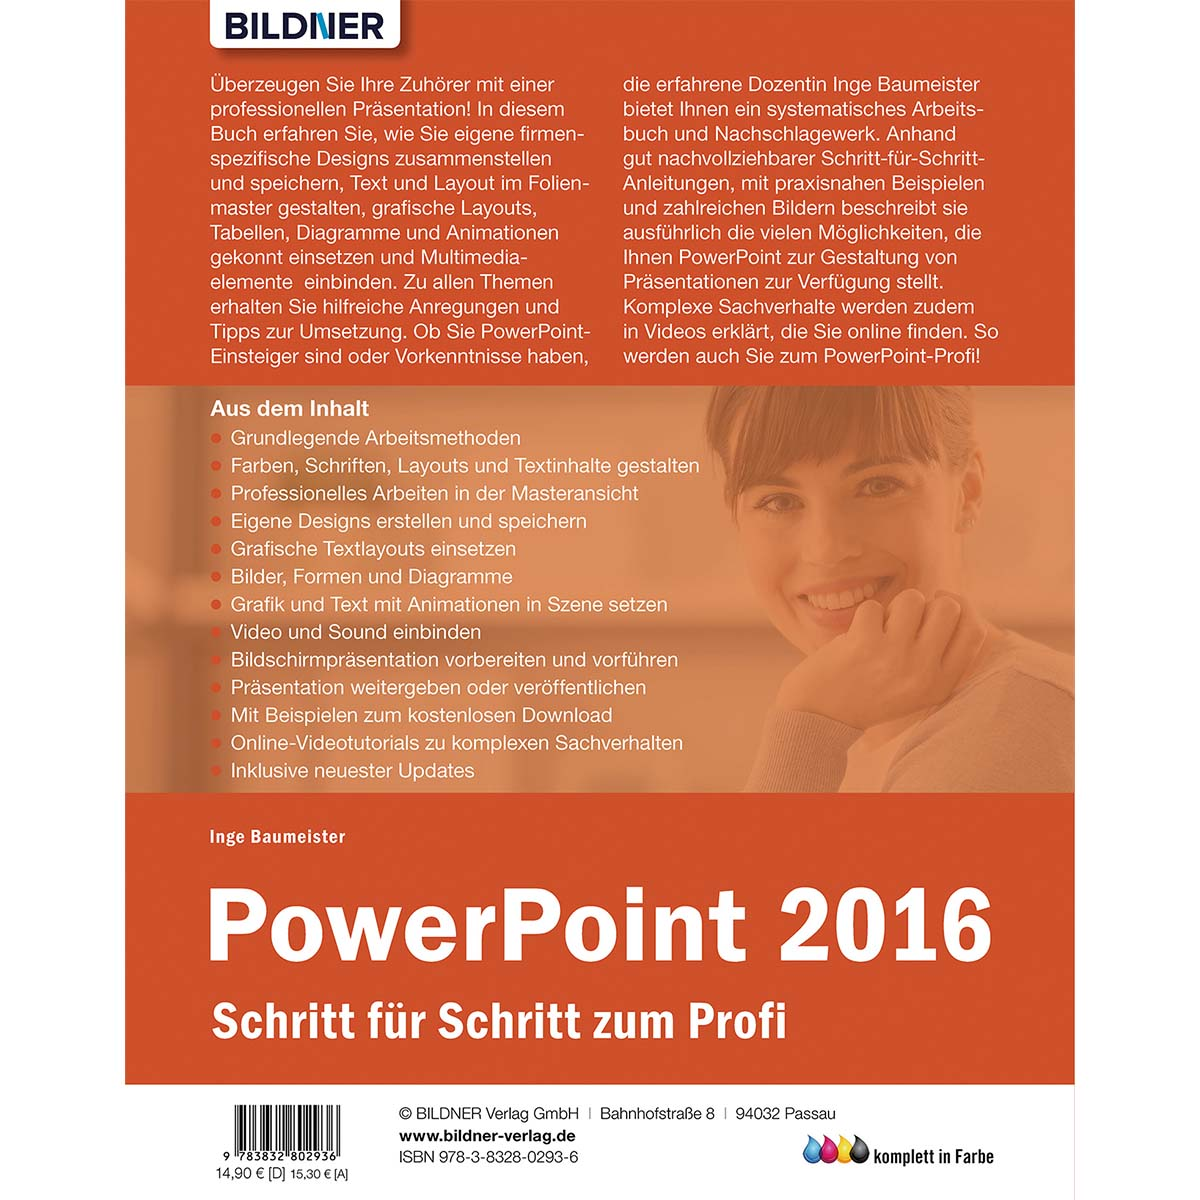 zum - für PowerPoint Schritt 2016 Schritt Profi